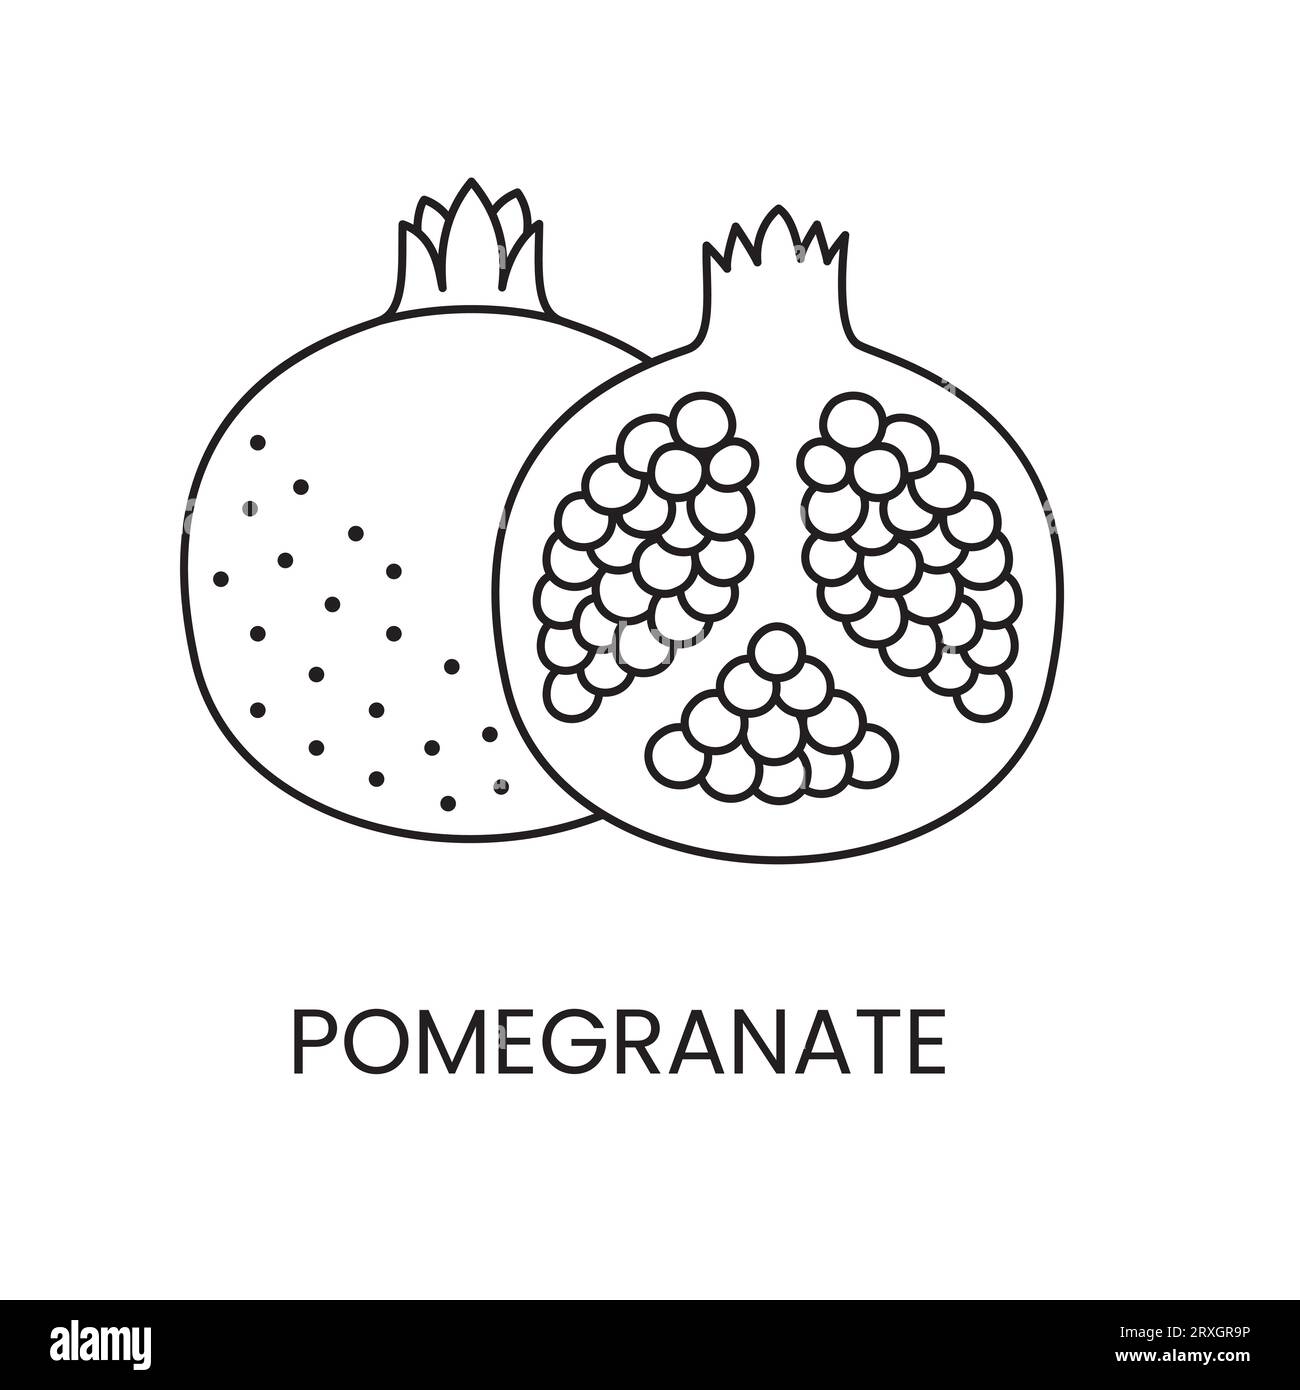 Pomegranate line icon in vector, fruit illustration Stock Vector